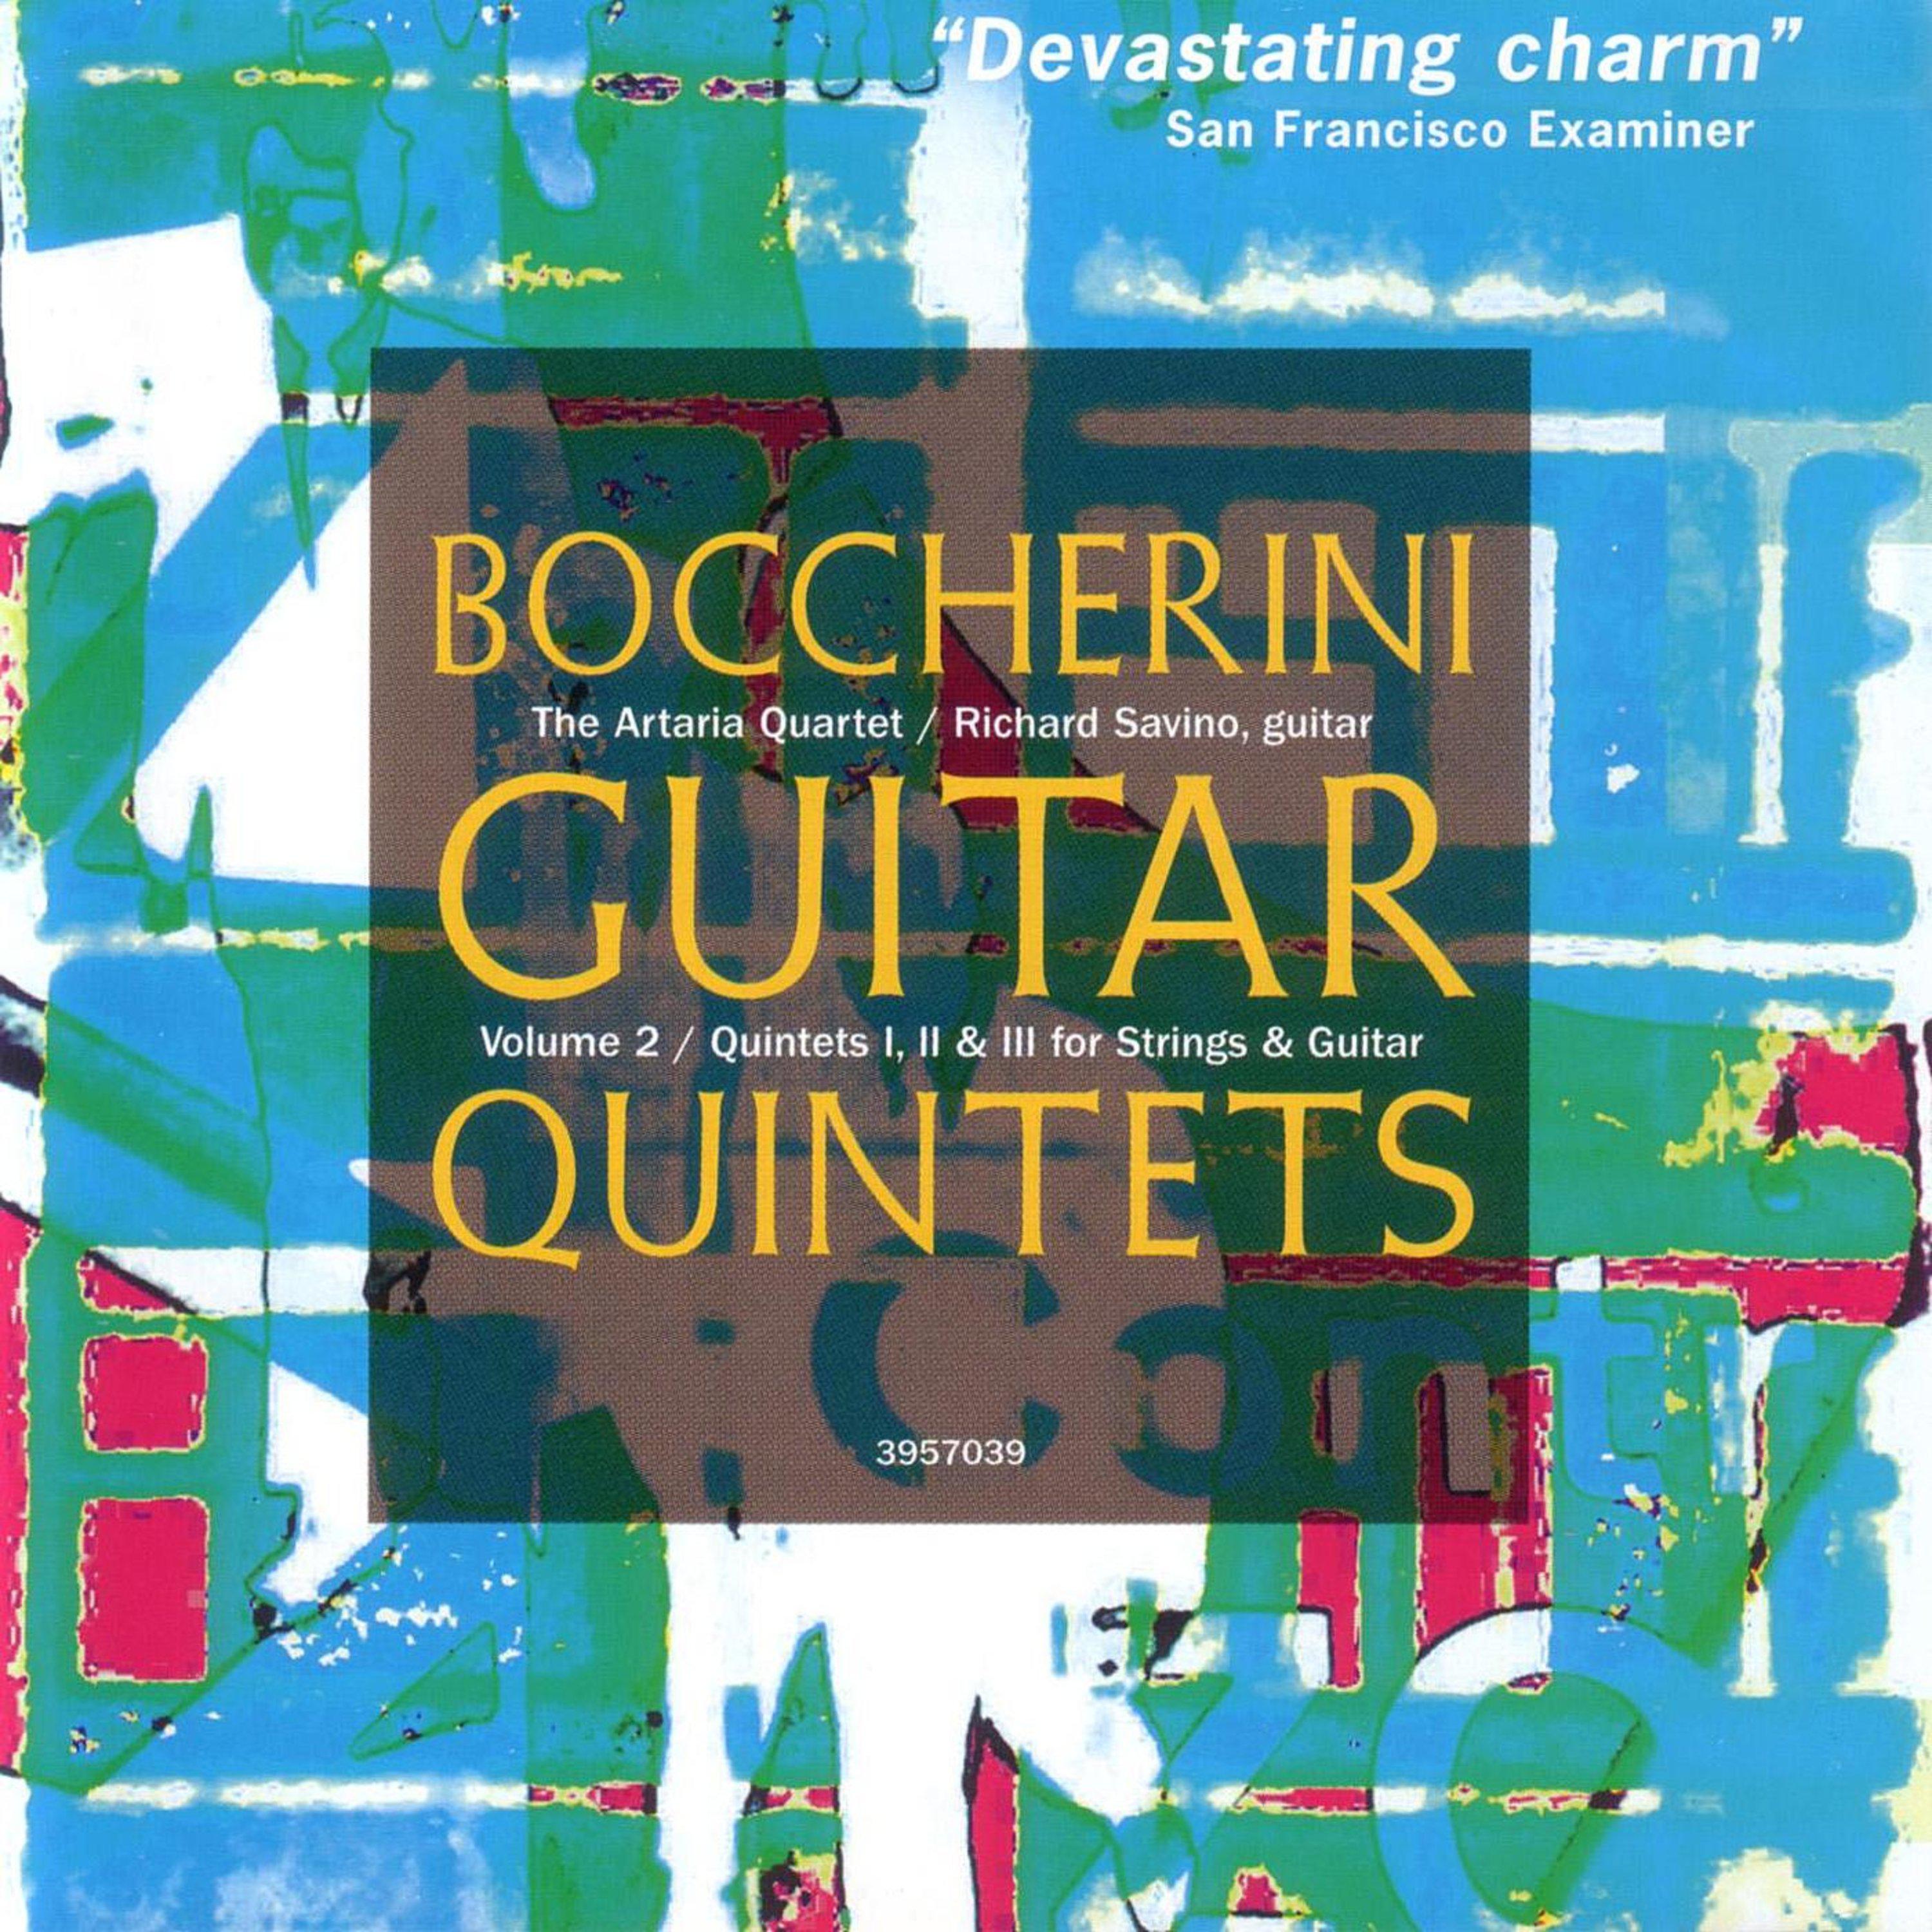 Richard Savino - Guitar Quintet No. 1 in D Minor, G. 445: III. Minuetto